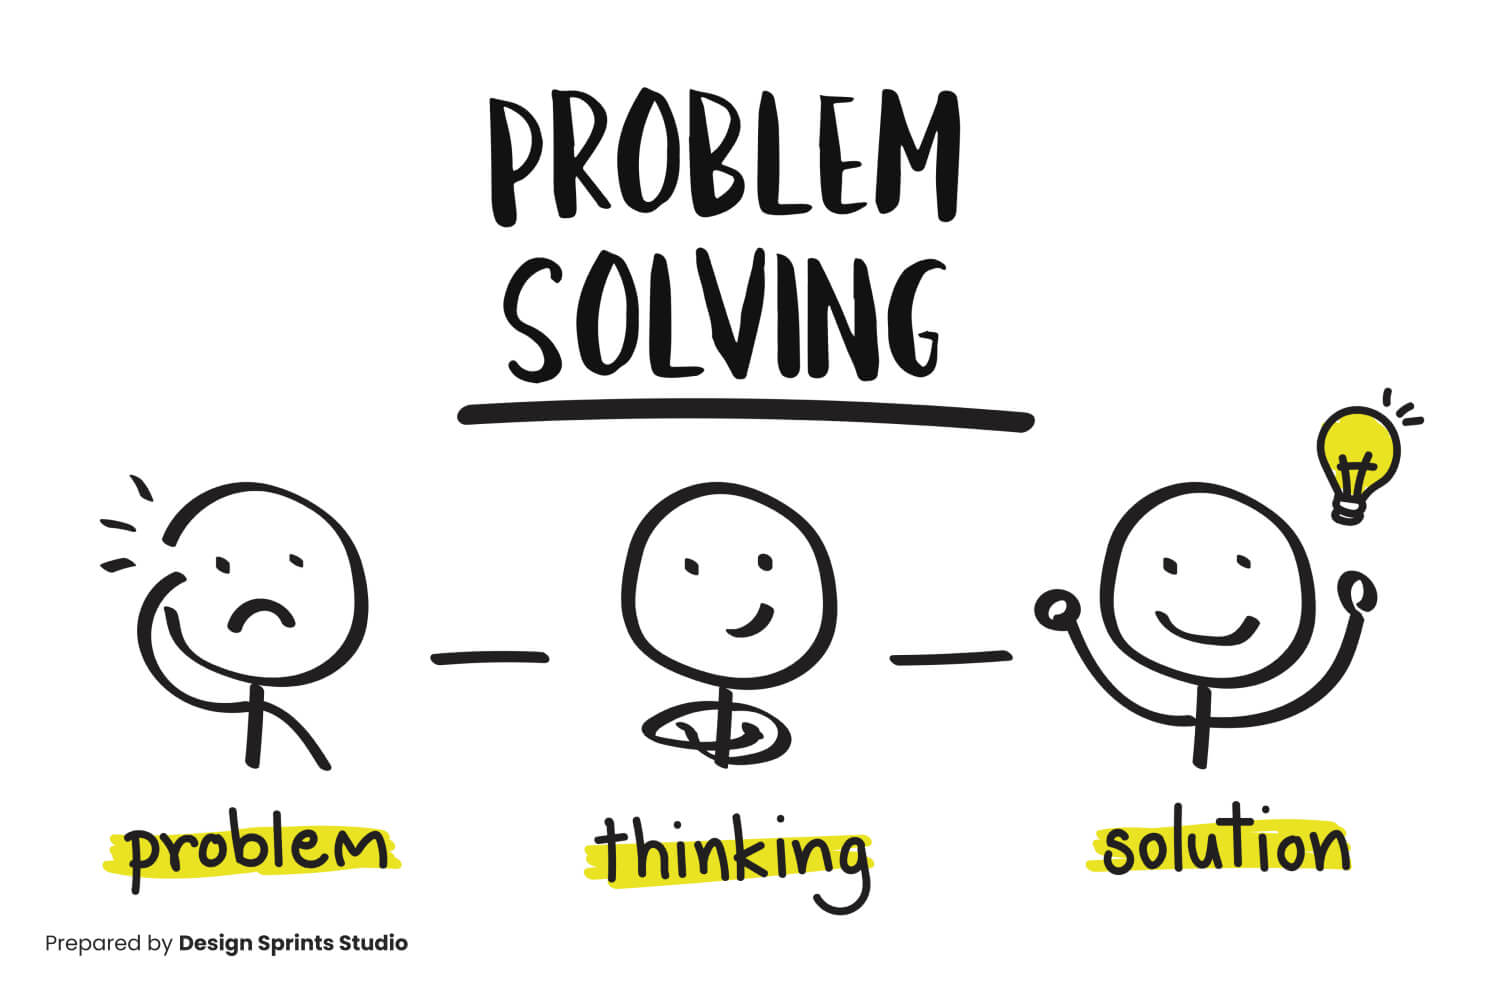 Problem Solving Explained